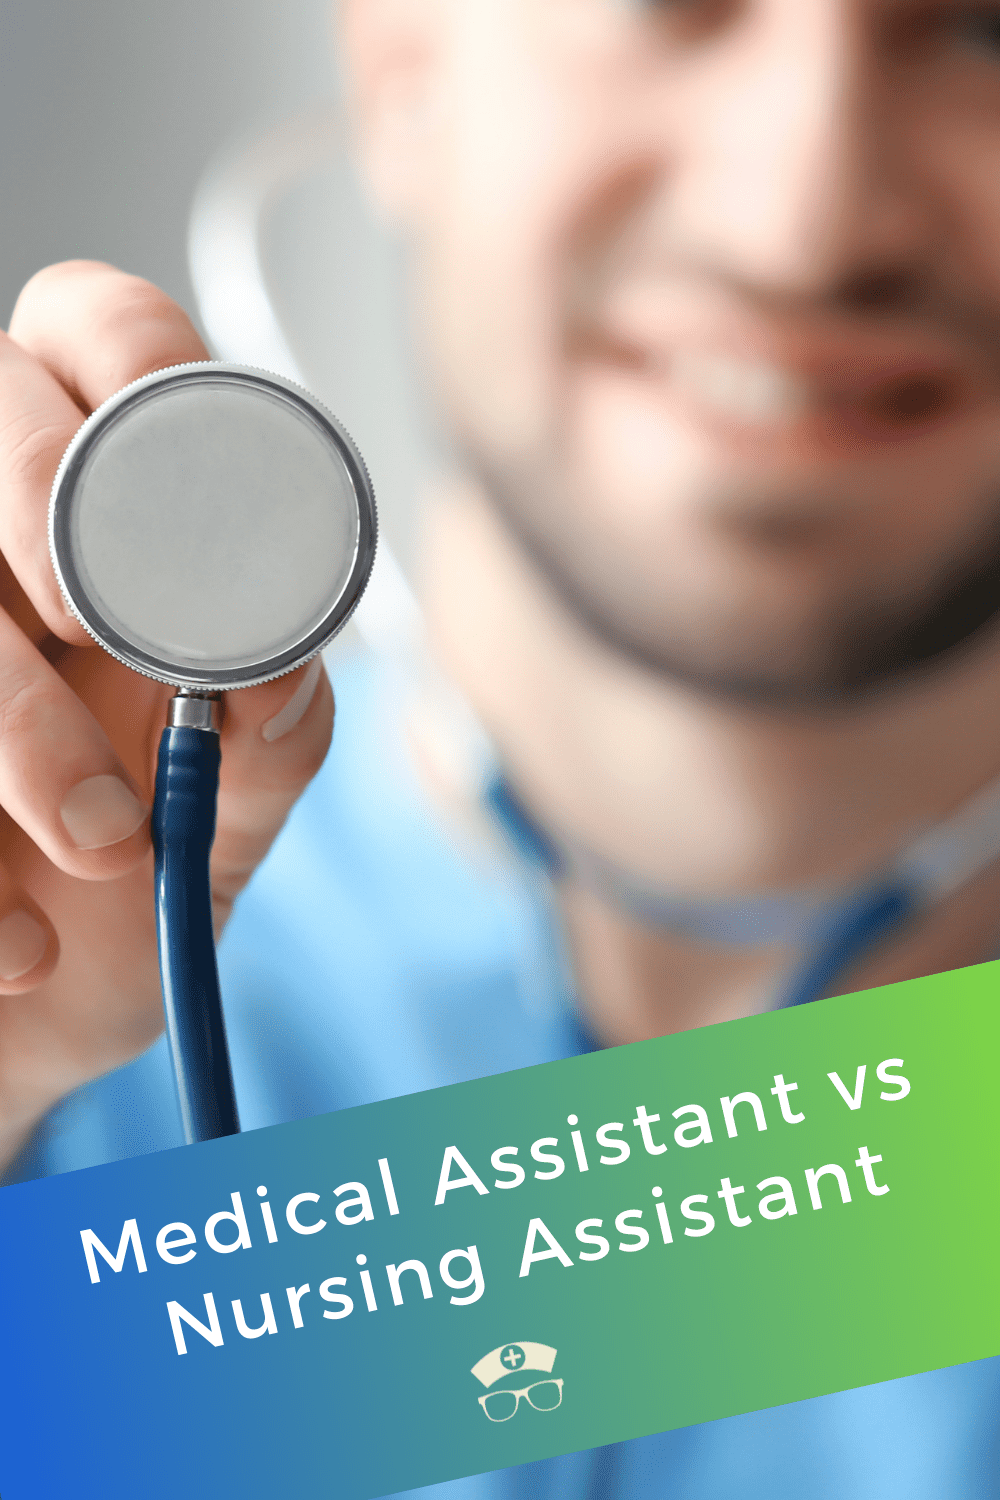 Medical Assistant Vs Nursing Assistant